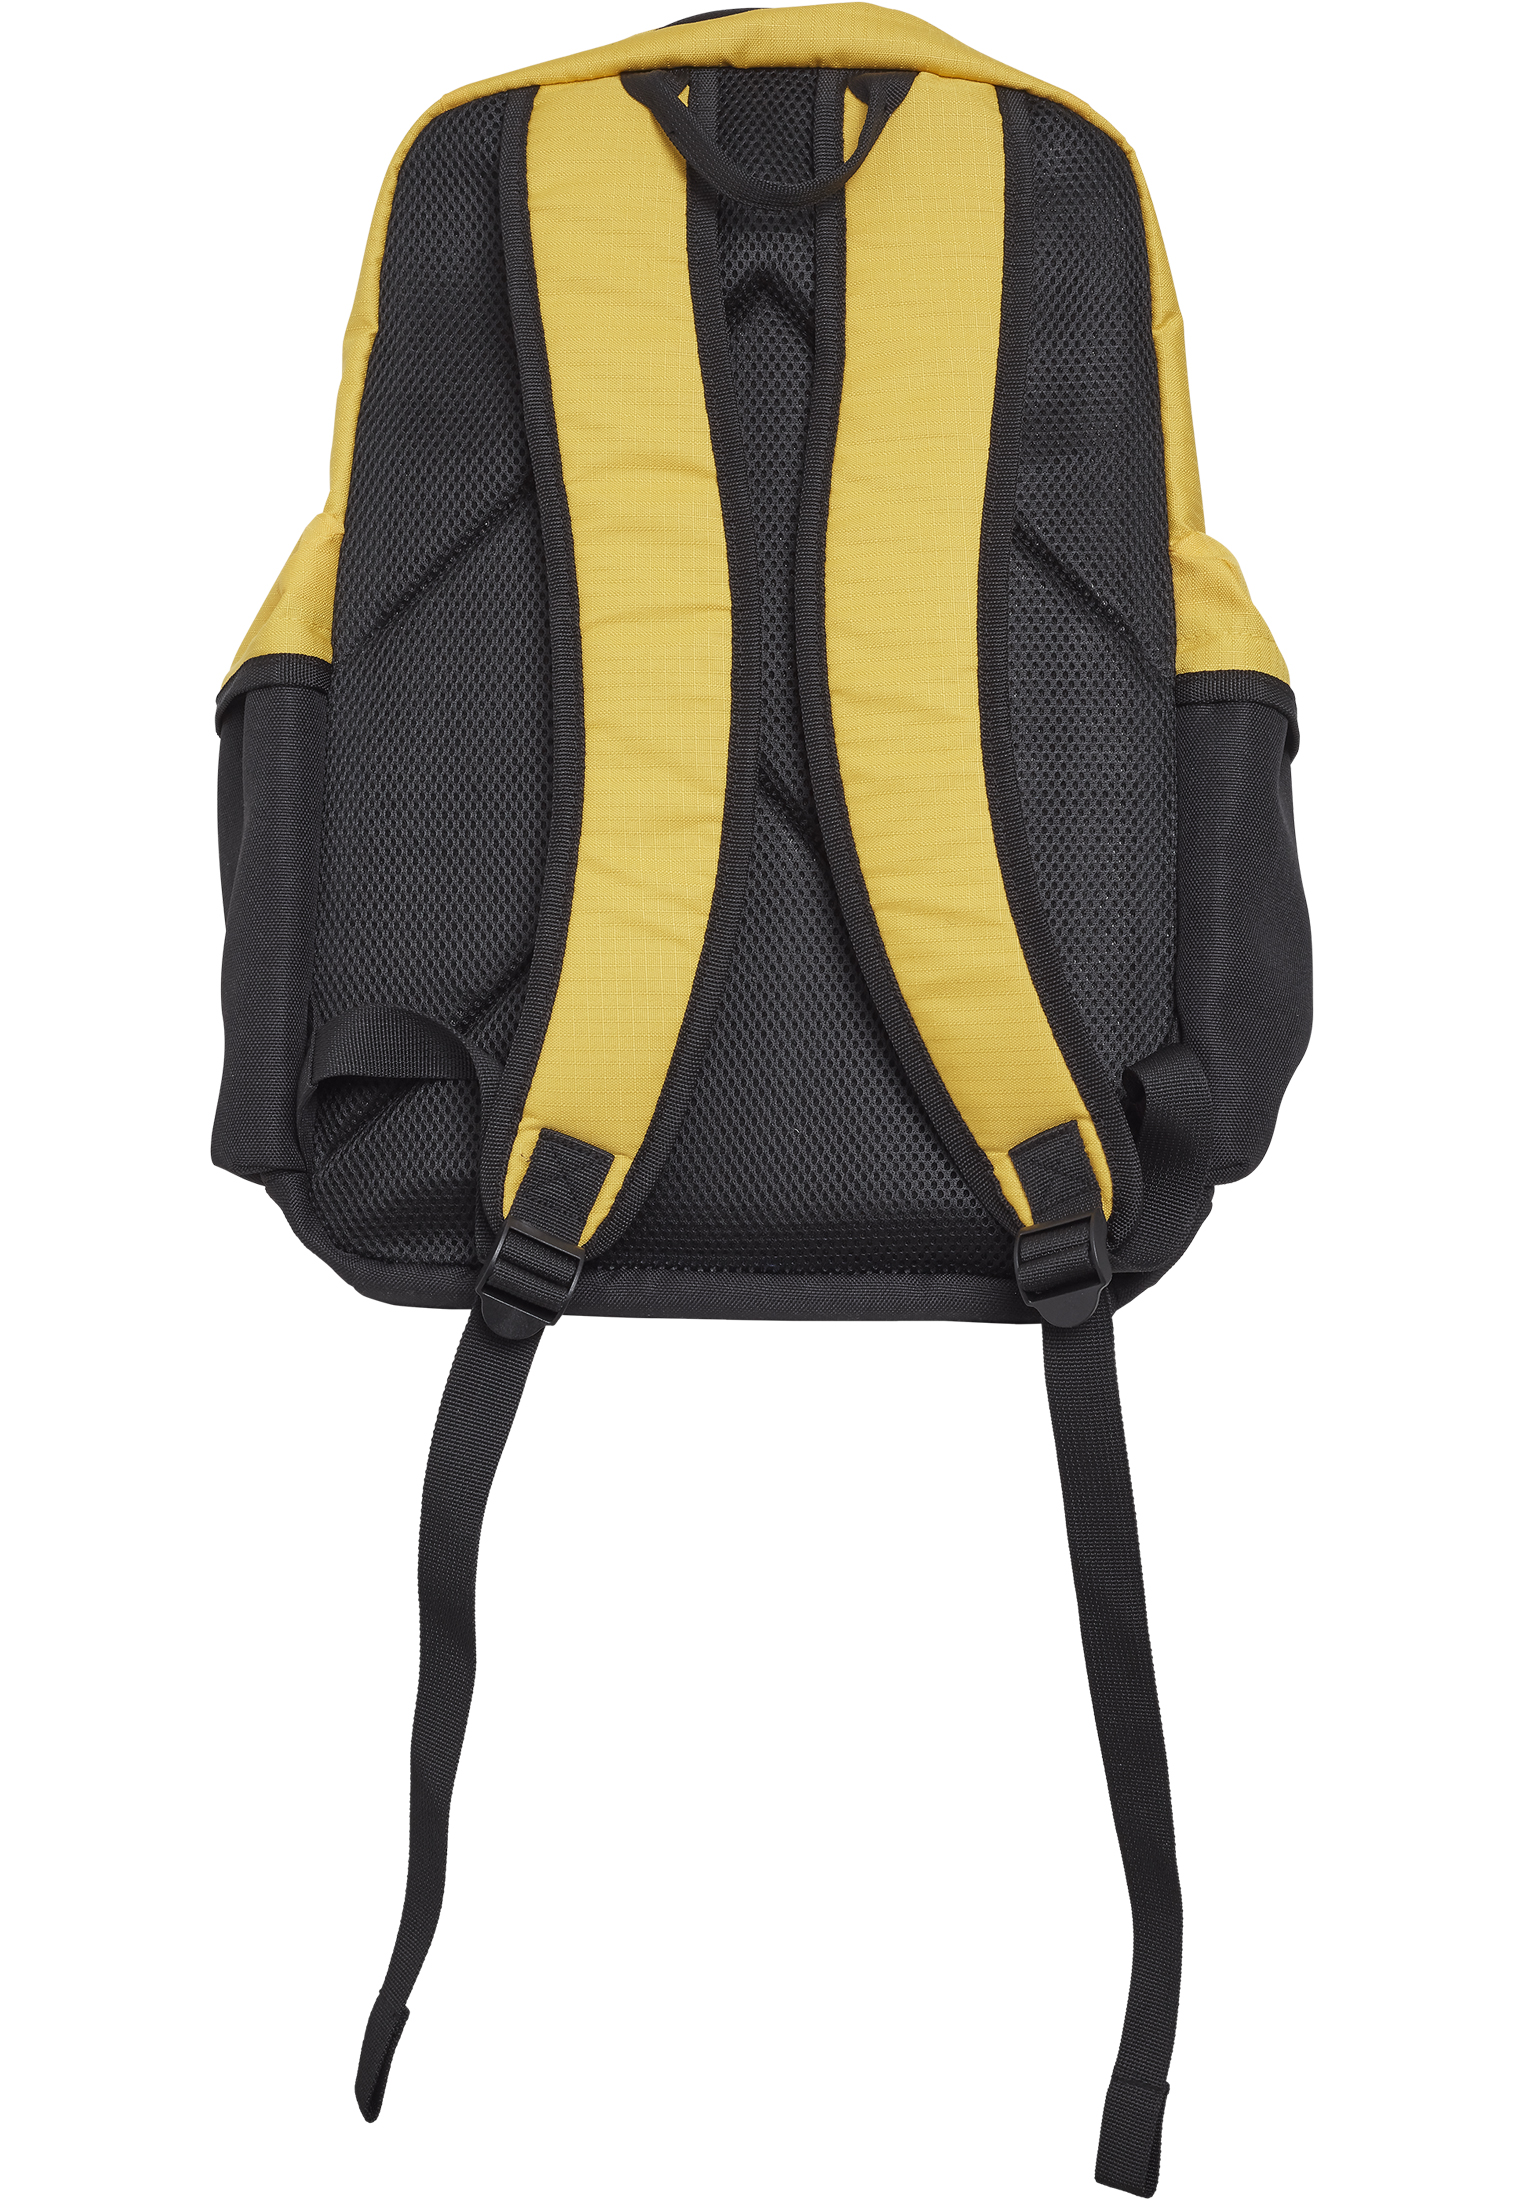 Taschen Backpack Colourblocking in Farbe chrome yellow/black/black